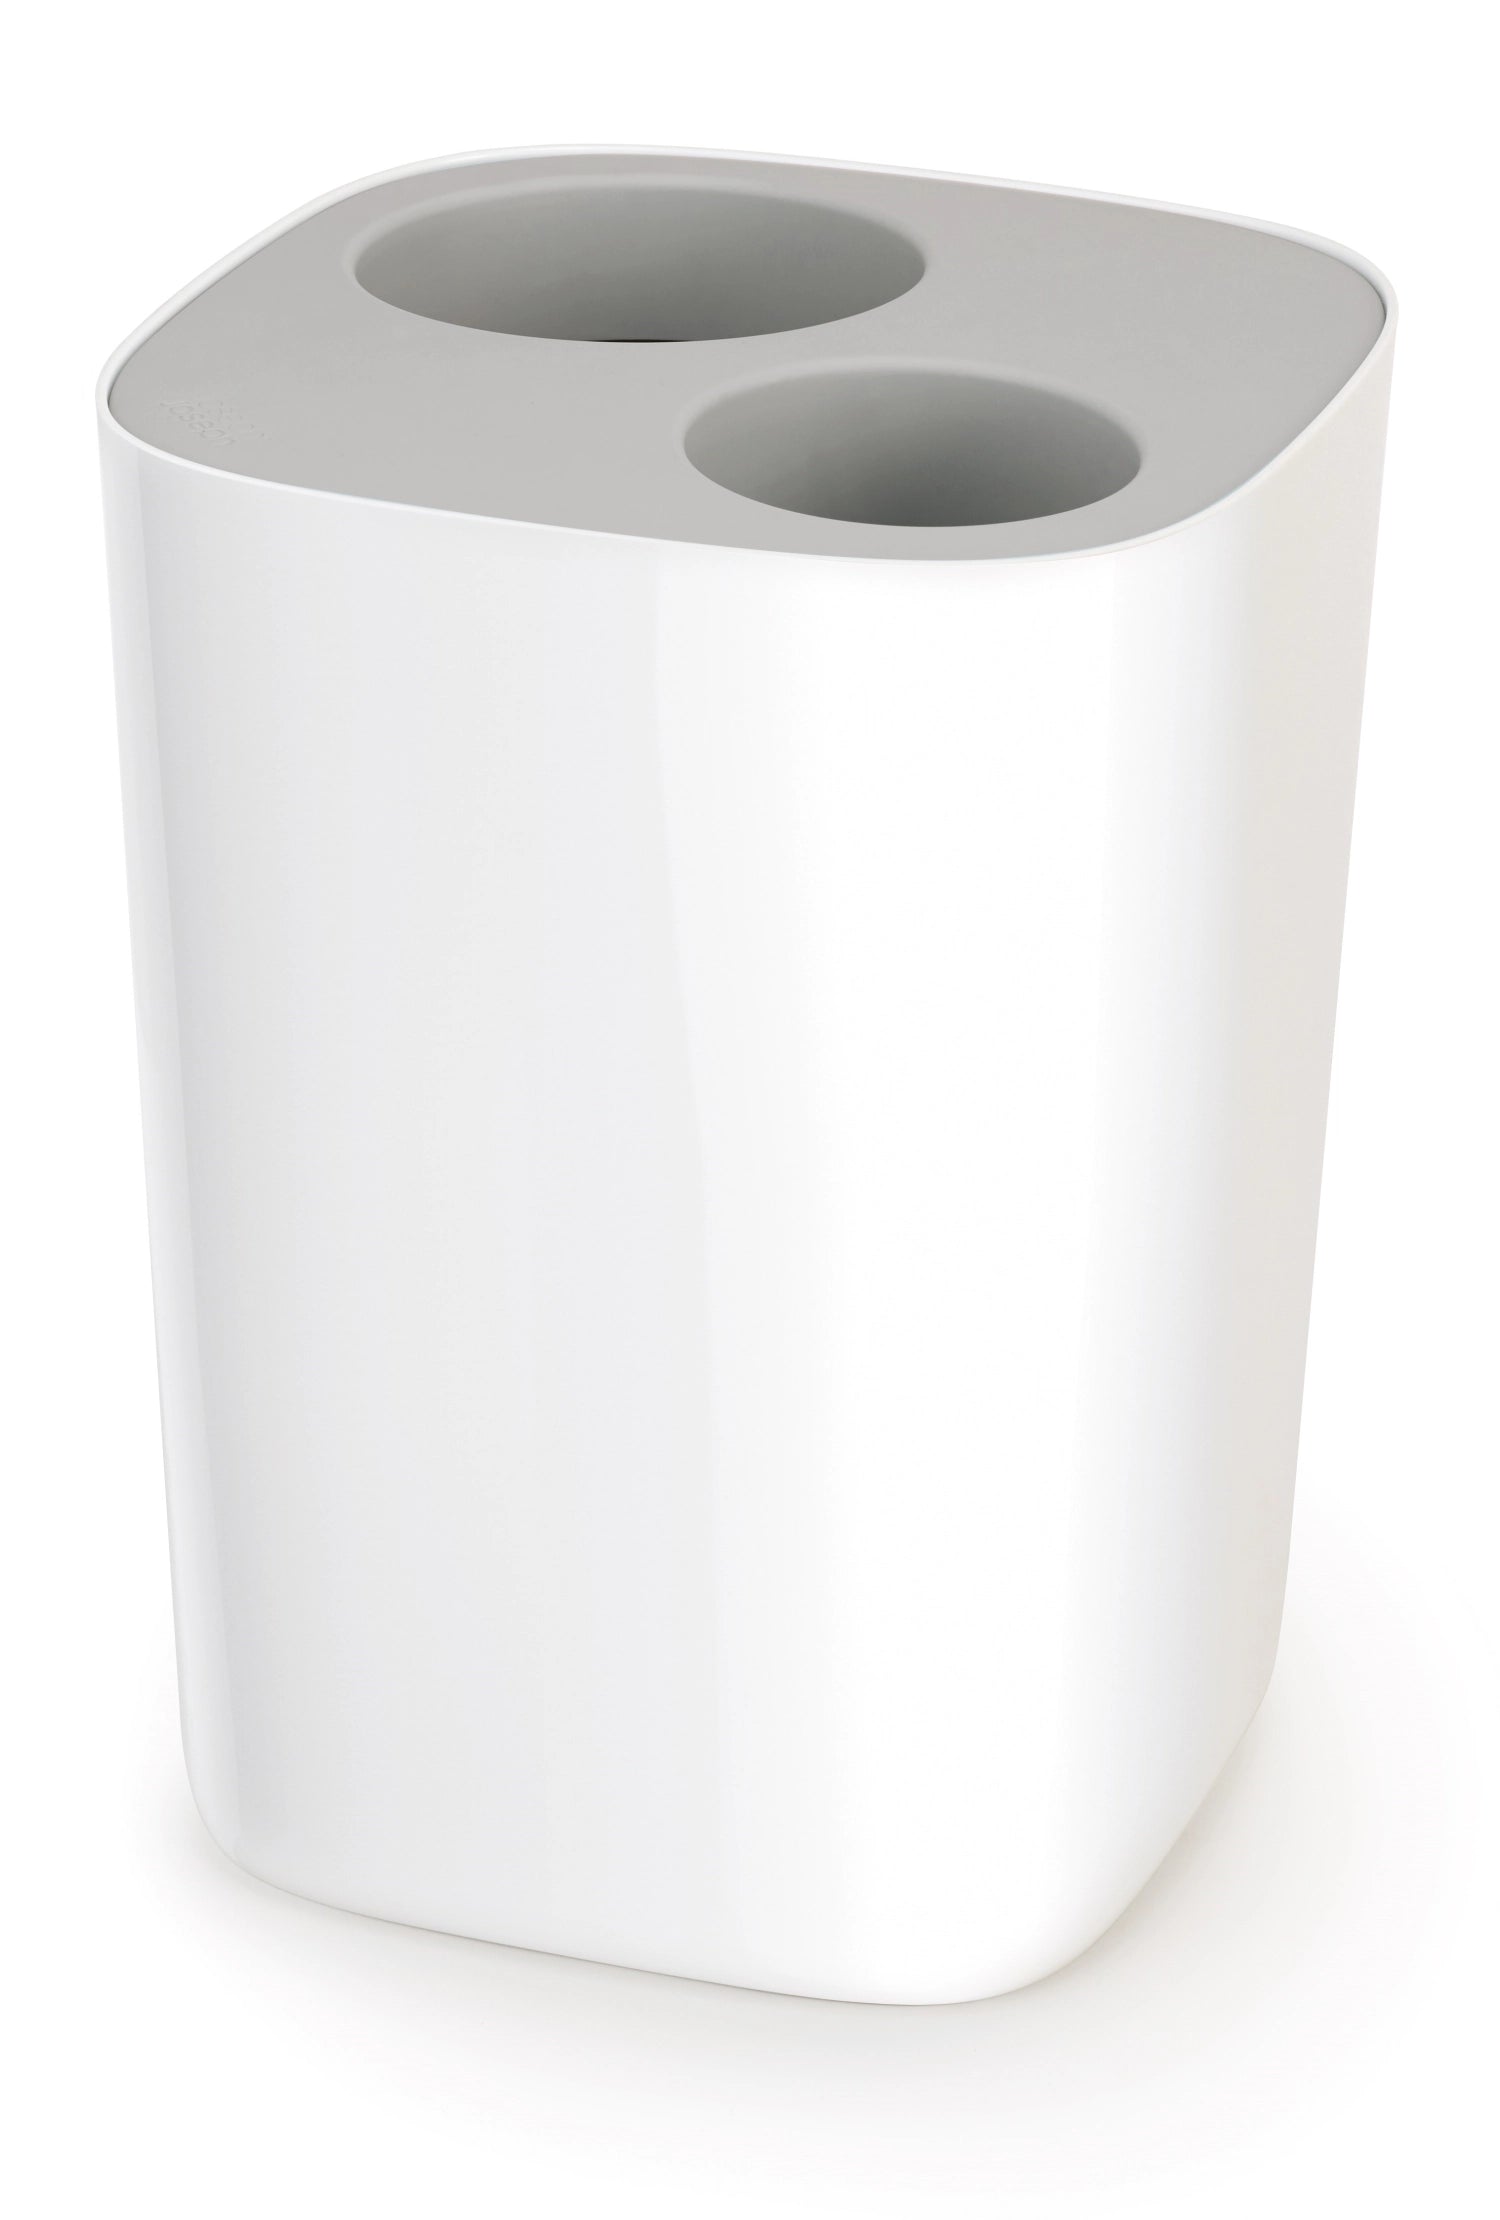 Split Trenn-Abfallbehälter weiss grau, 19x18.9x27.9 cm - KAQTU Design